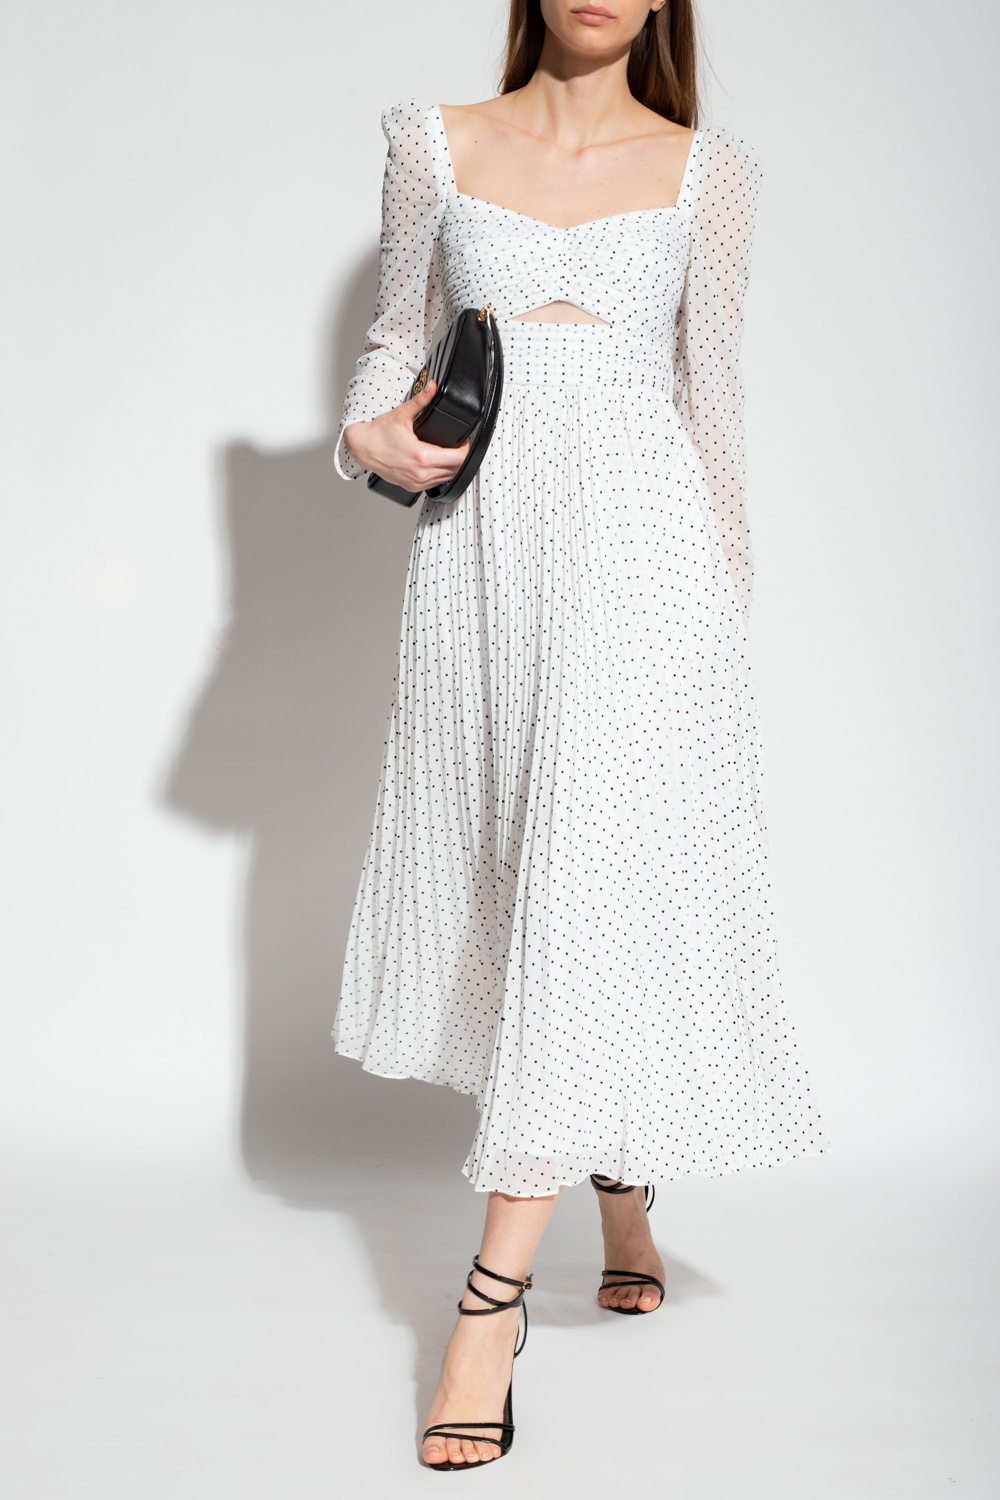 Self Portrait Polka dot dress | Women's Clothing | Vitkac